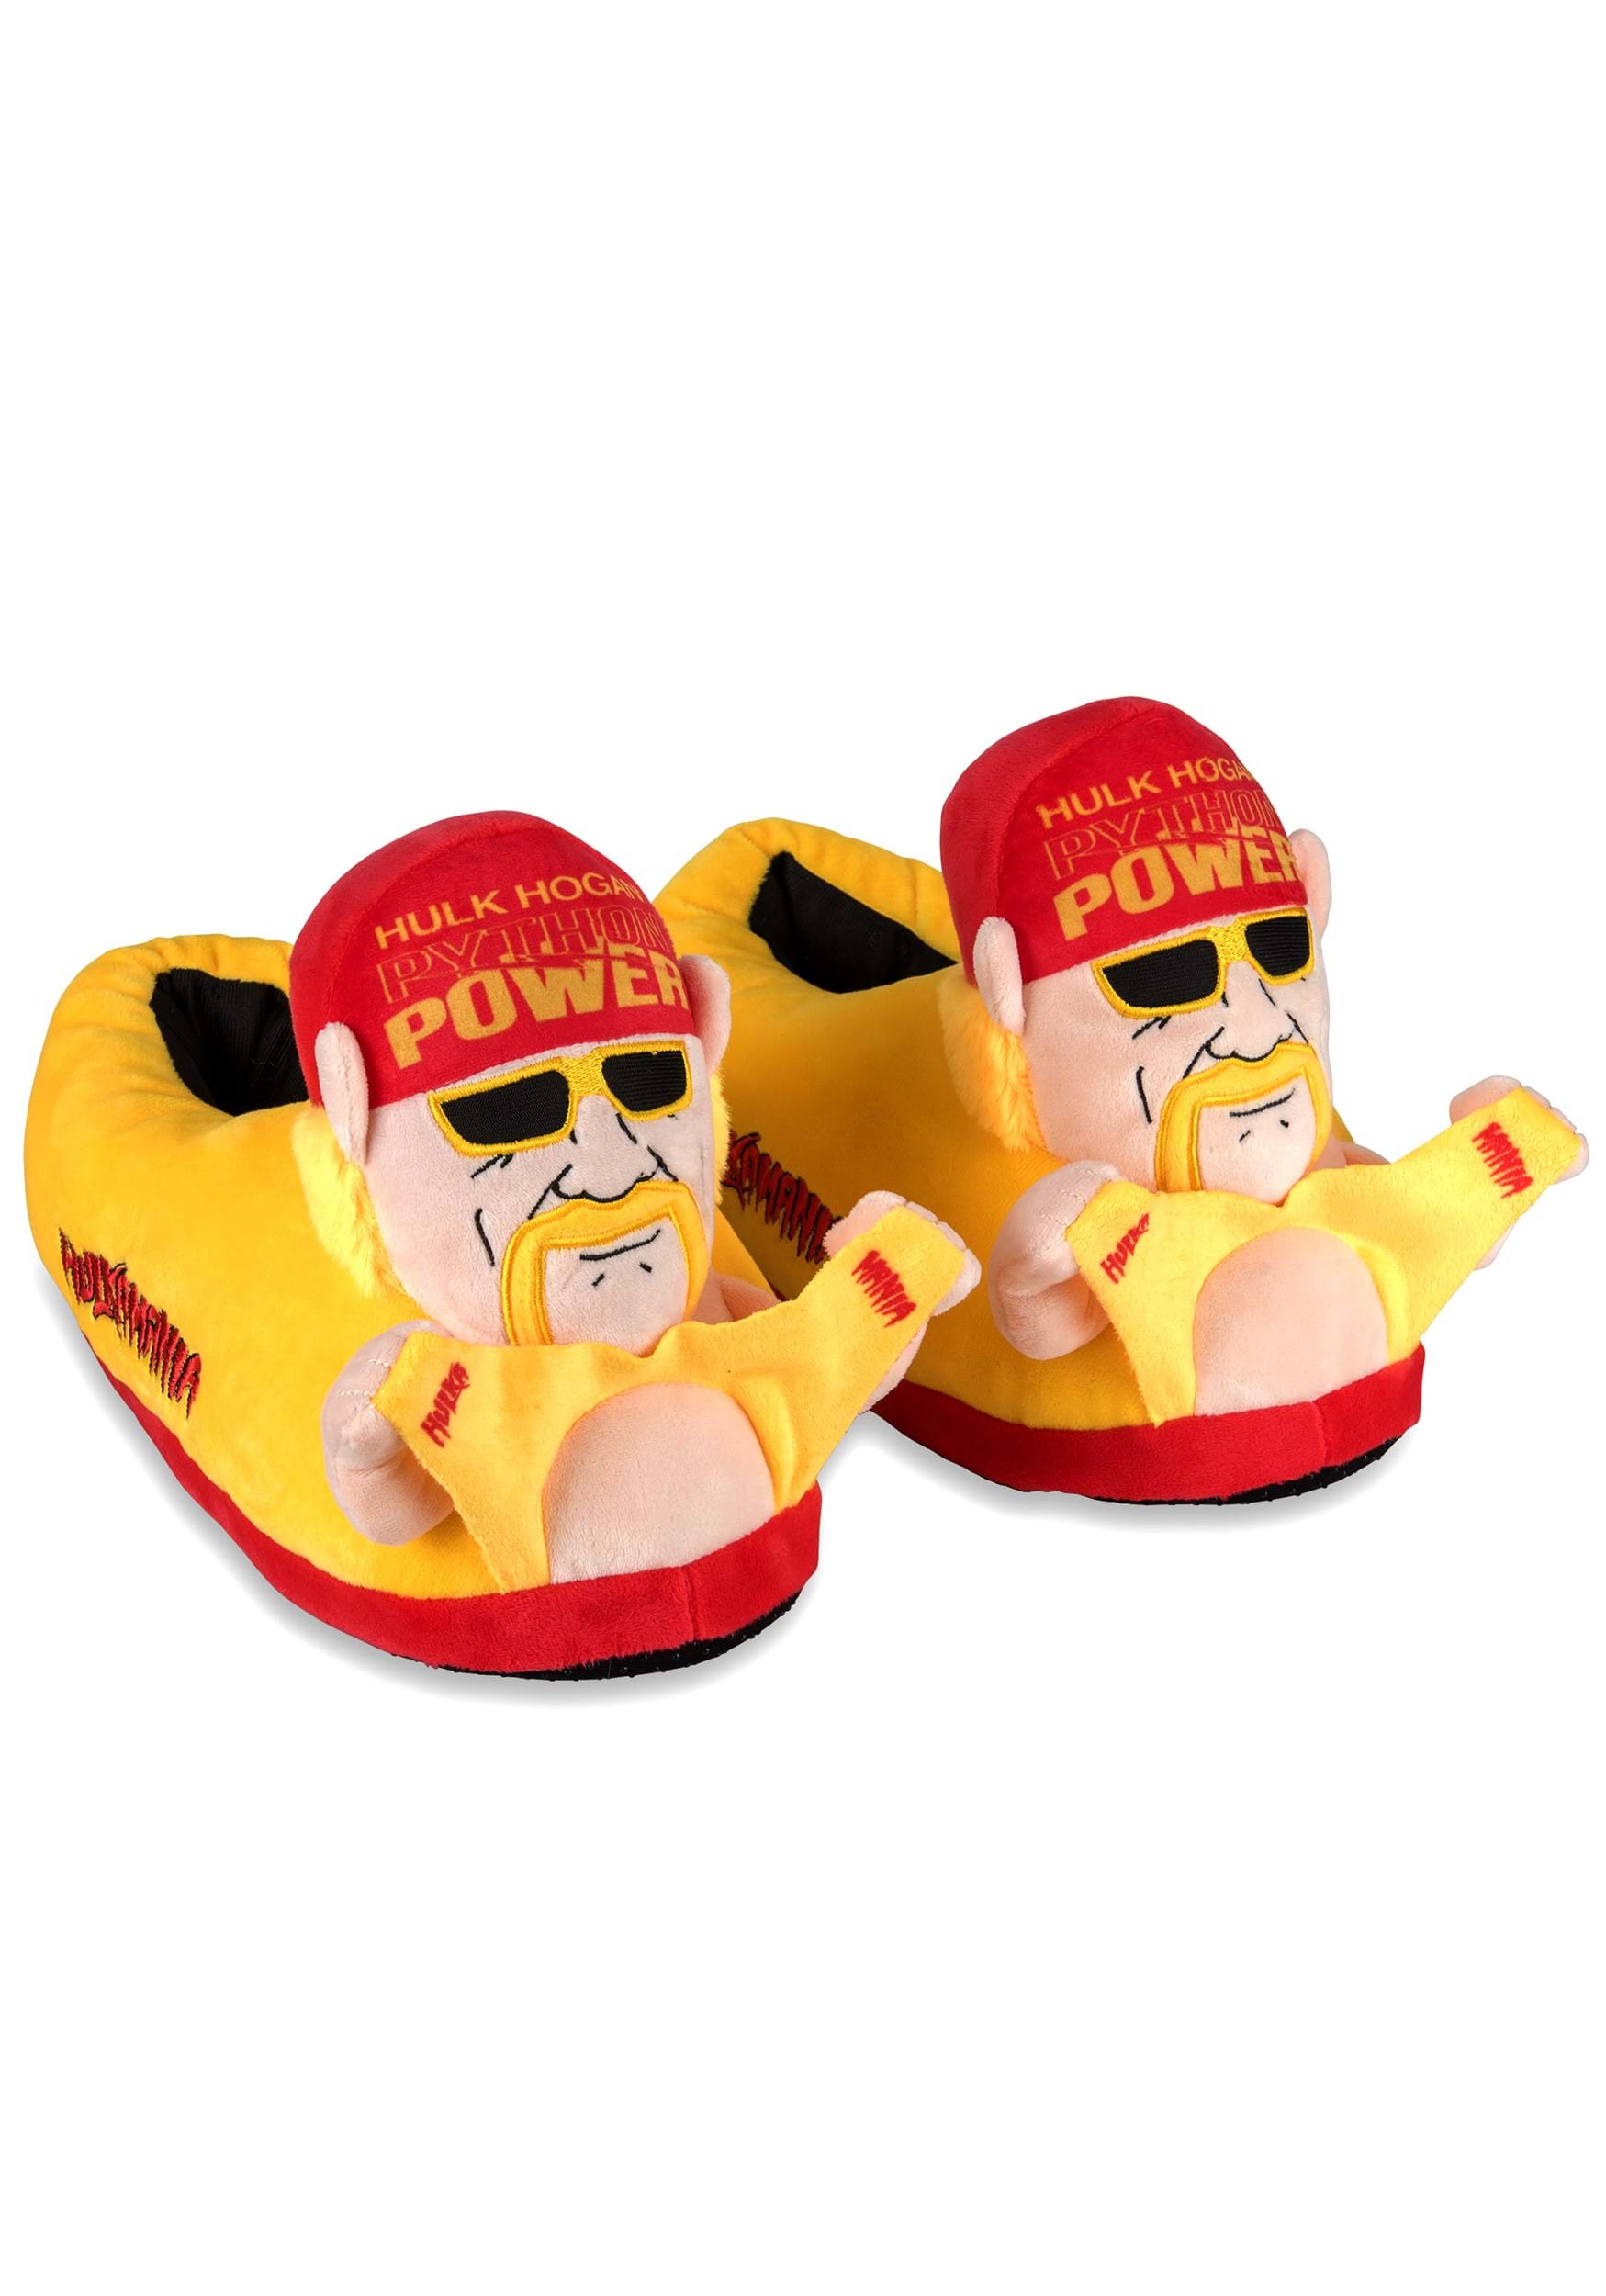 3D Hulk Hogan Slippers